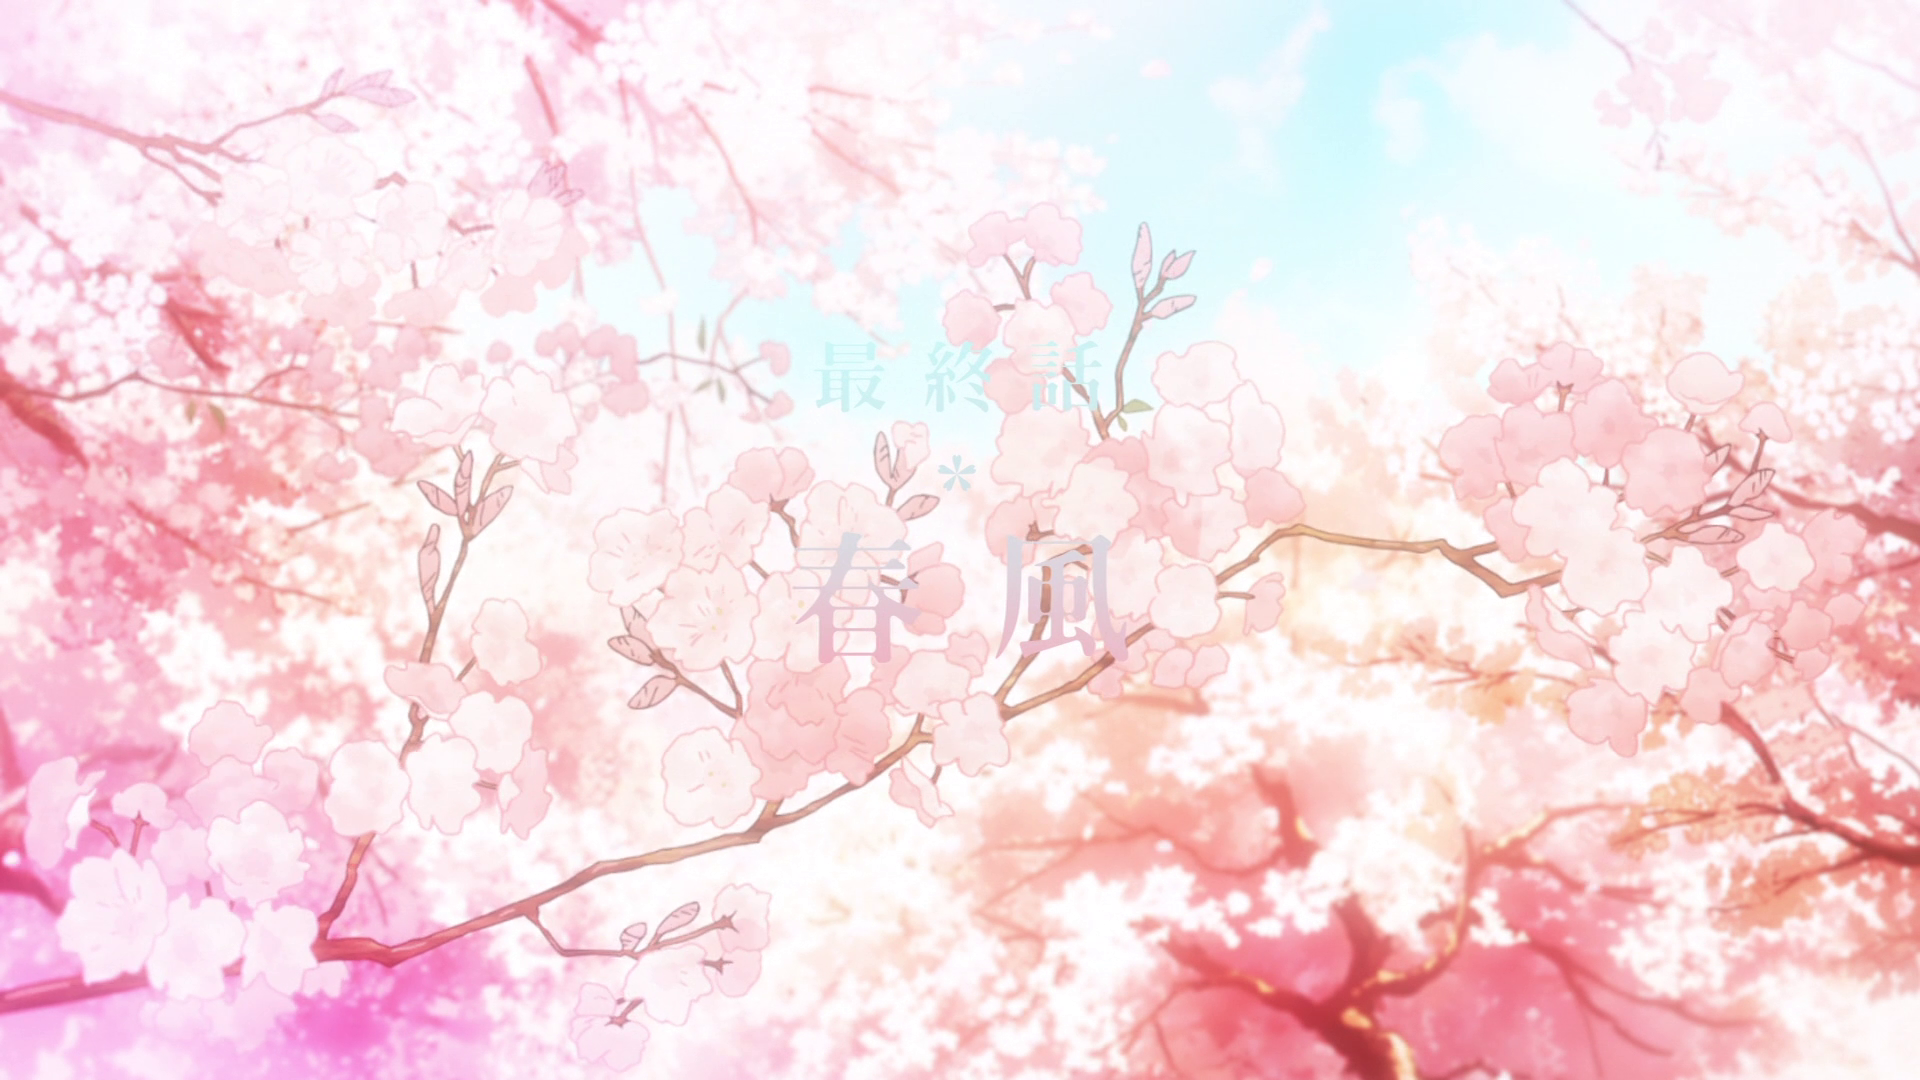 The last day of April [Shigatsu wa Kimi no Uso] : r/animeponytails